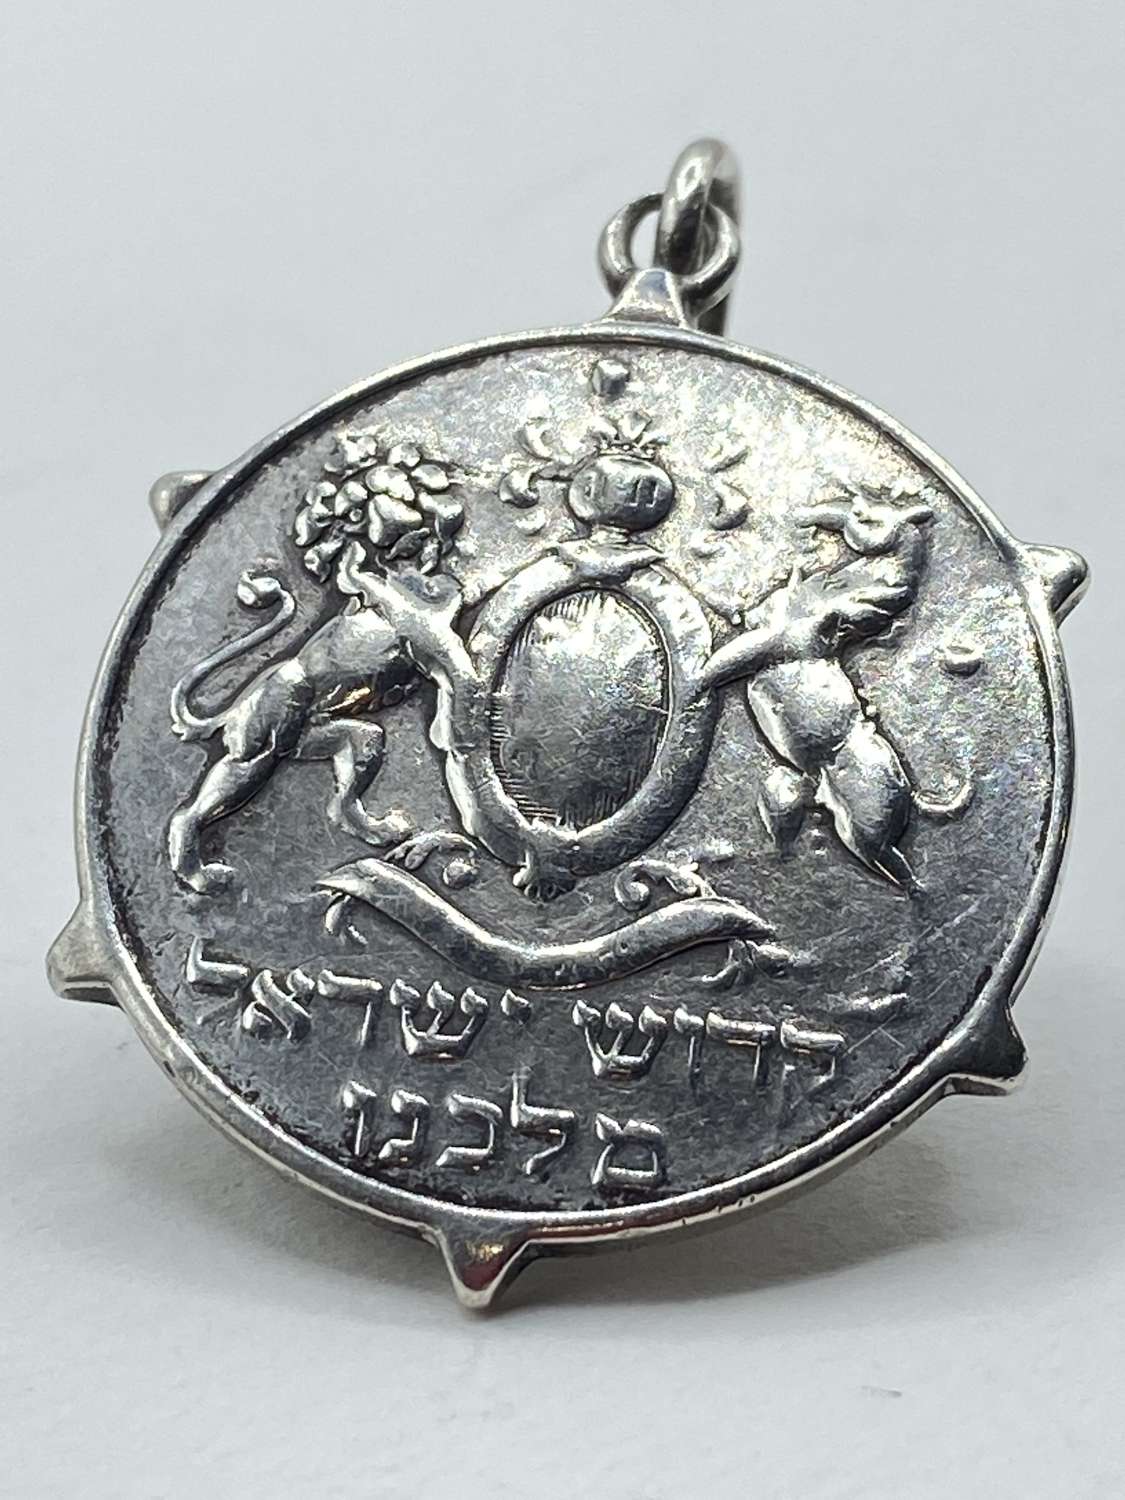 Circa 19th British-Israelite Religion Kadosh Malkeinu Atem Edai Medal